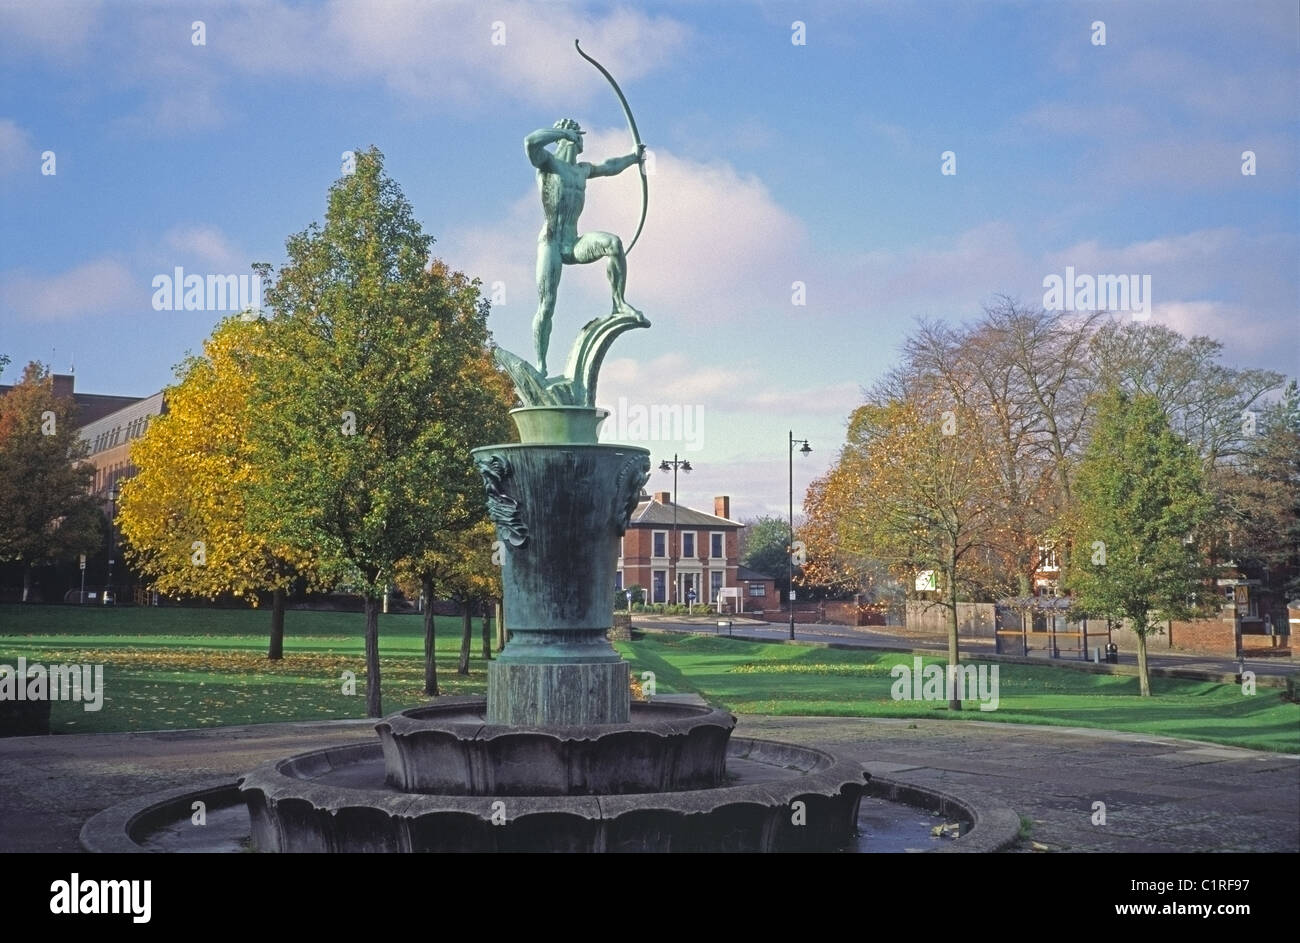 Statue of Eros in Coronation Public Gardens, Dudley, West Midlands, UK Stock Photo